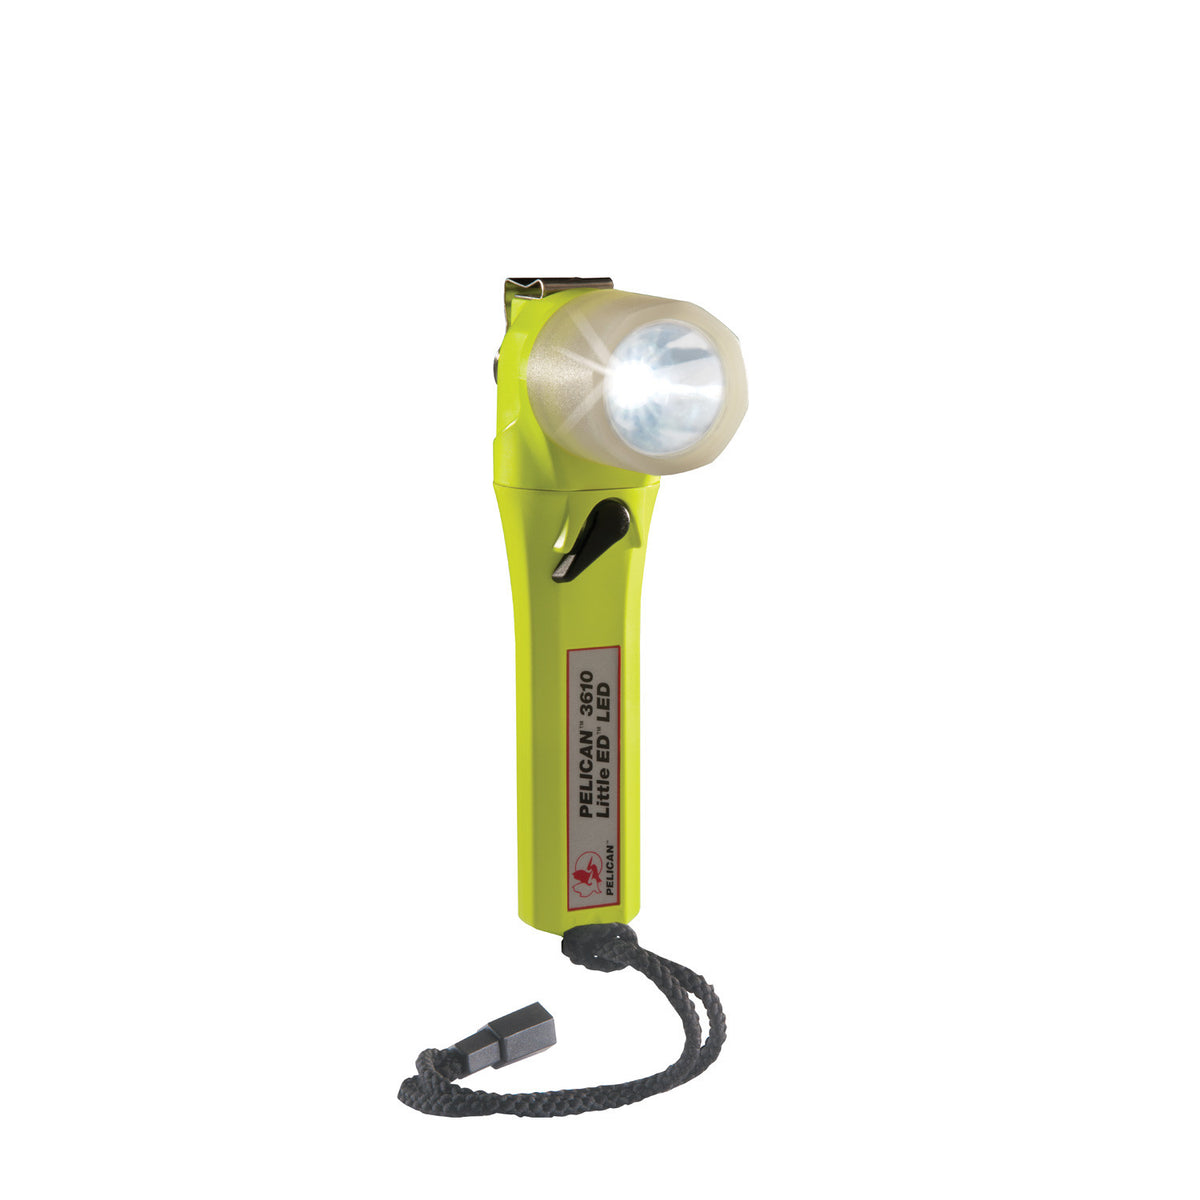 Little Ed 3610 led Photoluminescent Flashlight